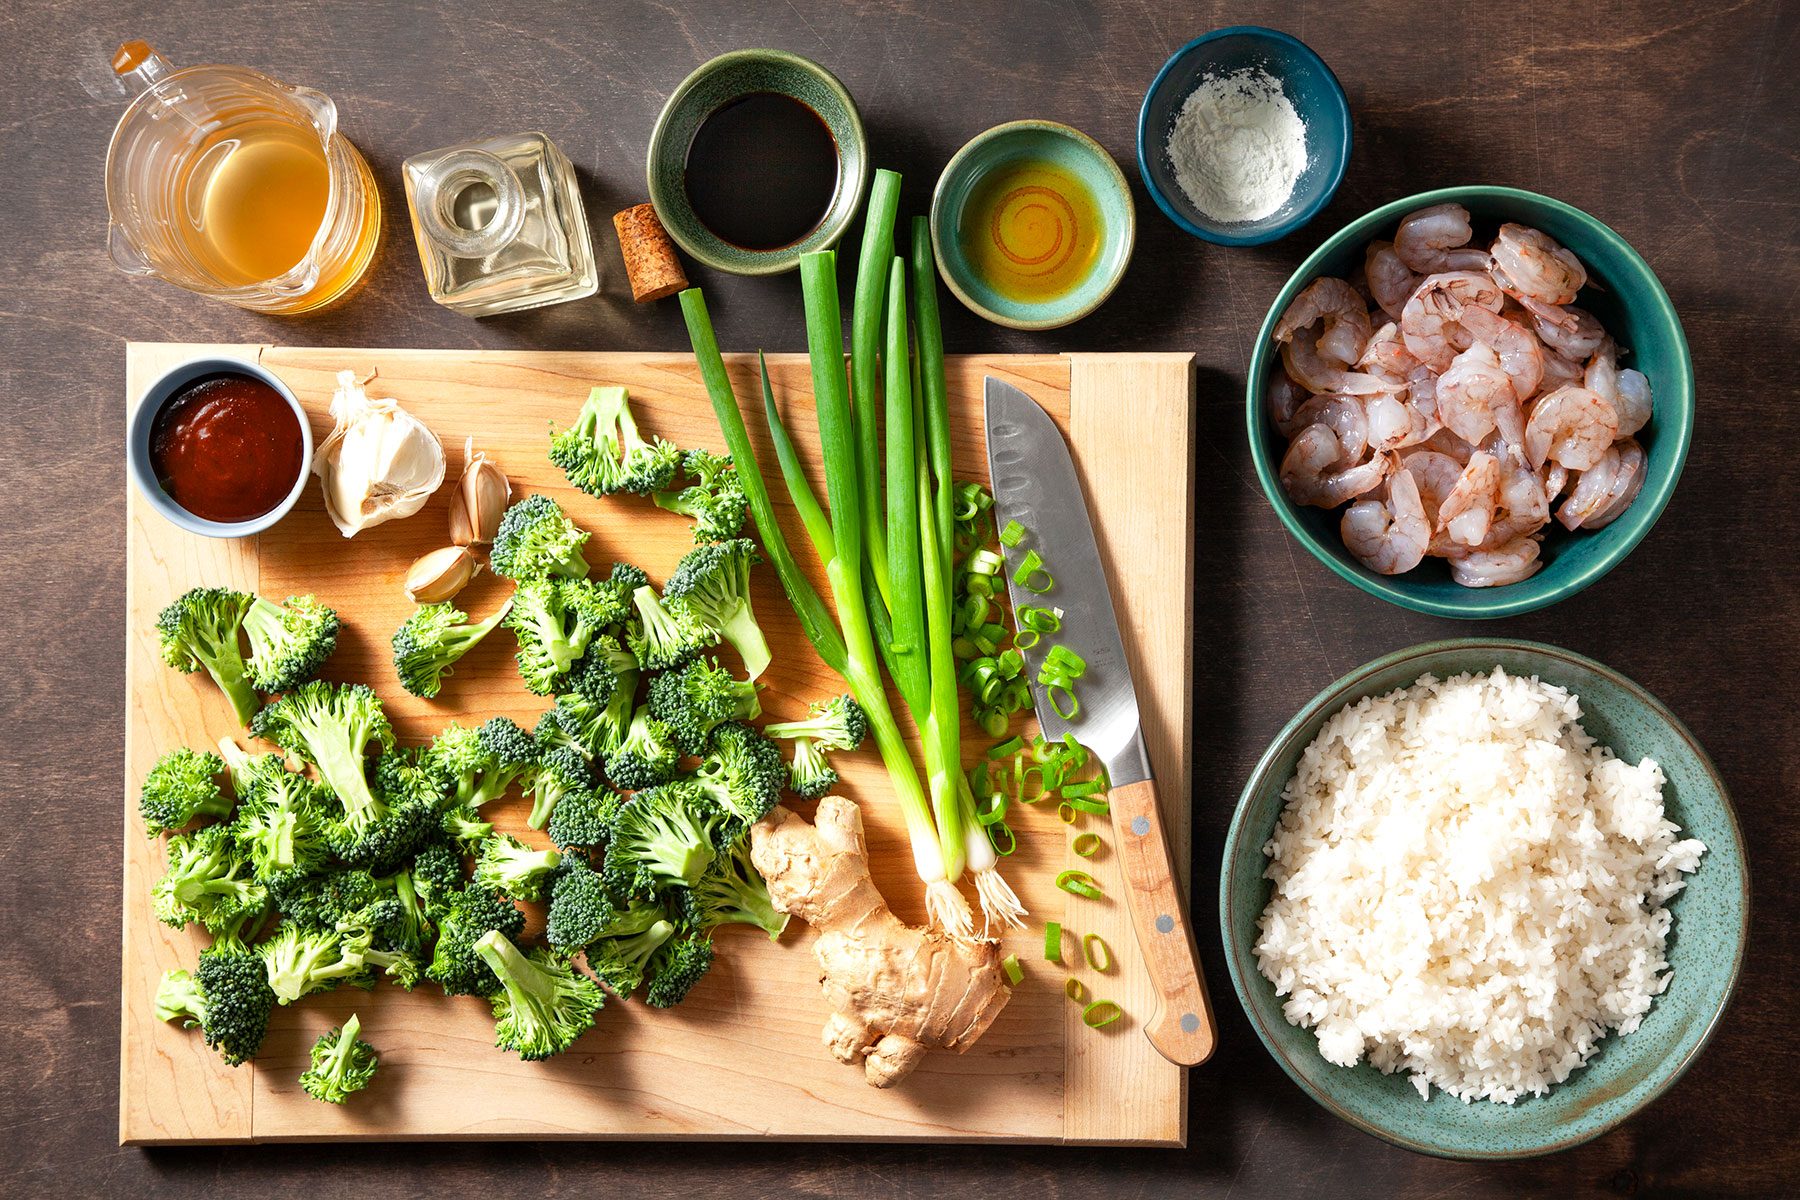 Ingredients for Shrimp And Broccoli Stir Fry 